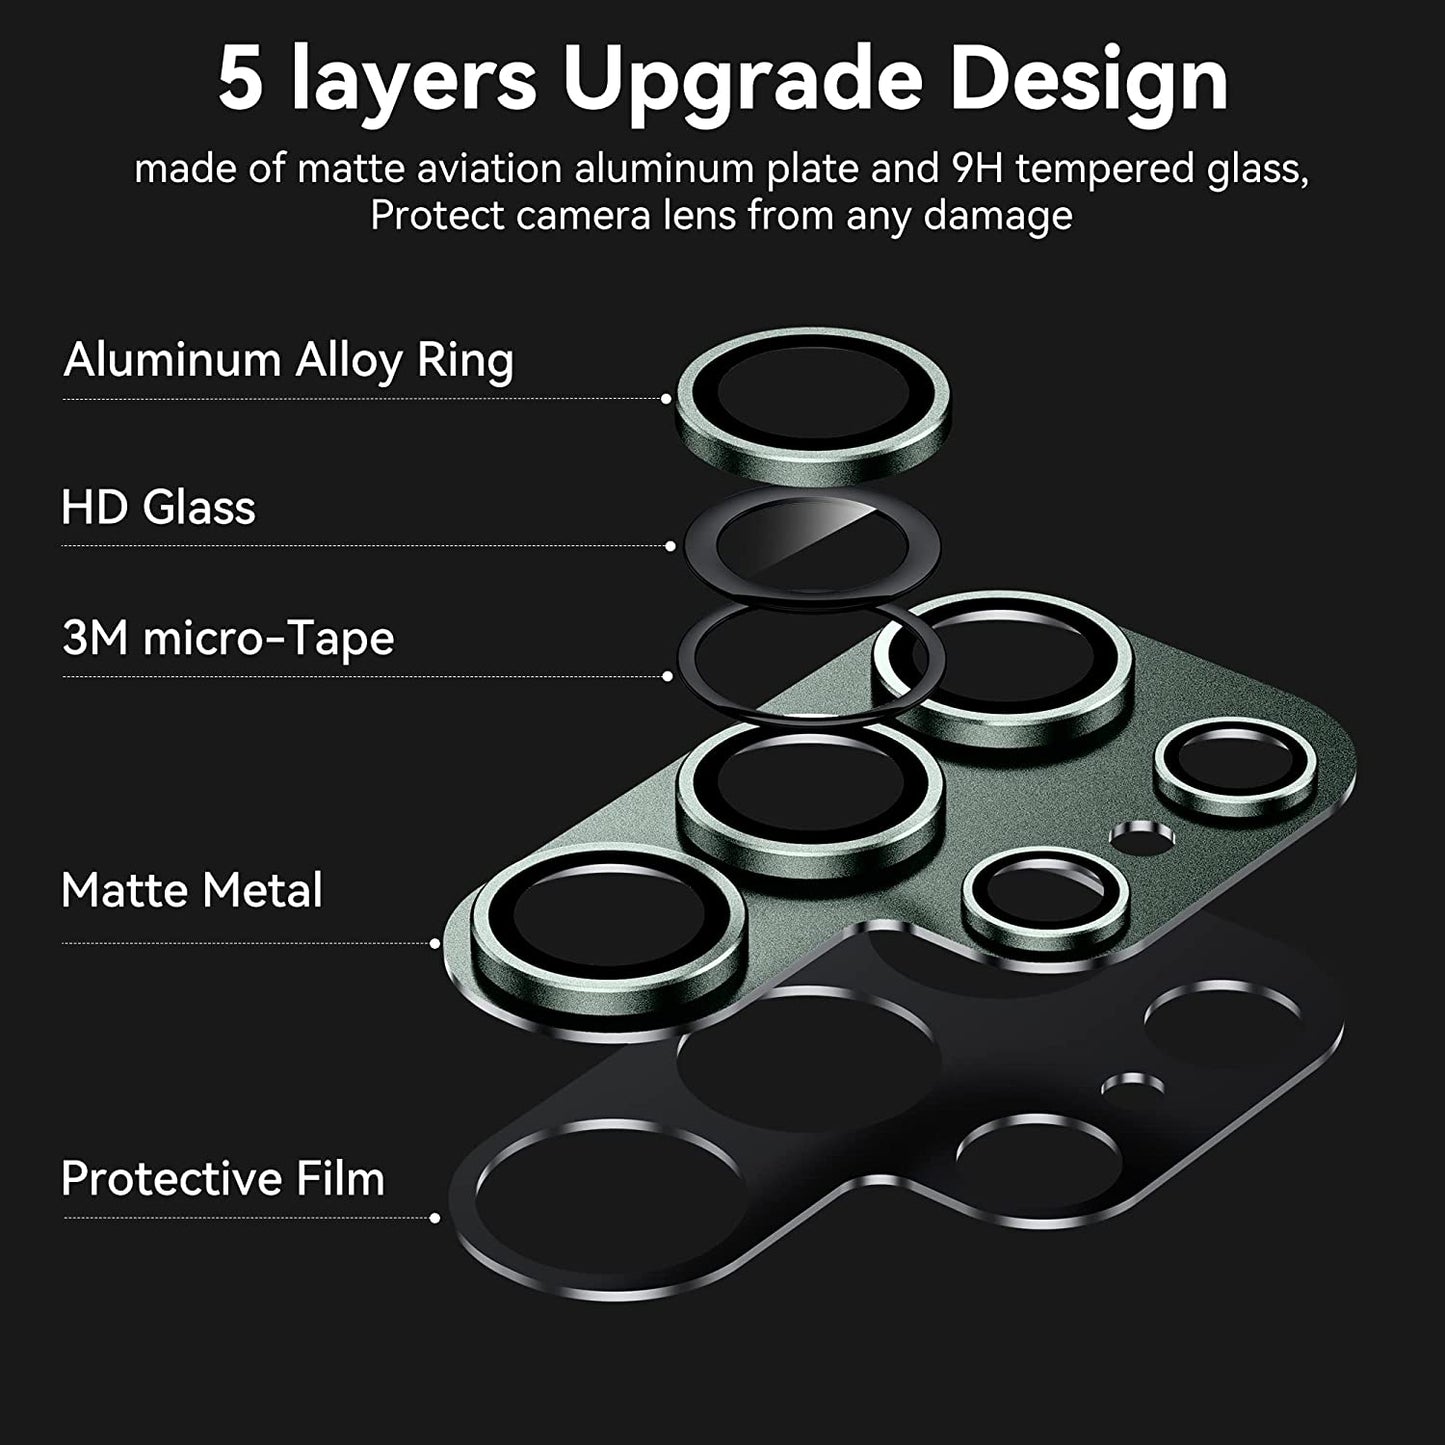 Mansoorr for Samsung Galaxy S23 Ultra Camera Lens Protector, Green